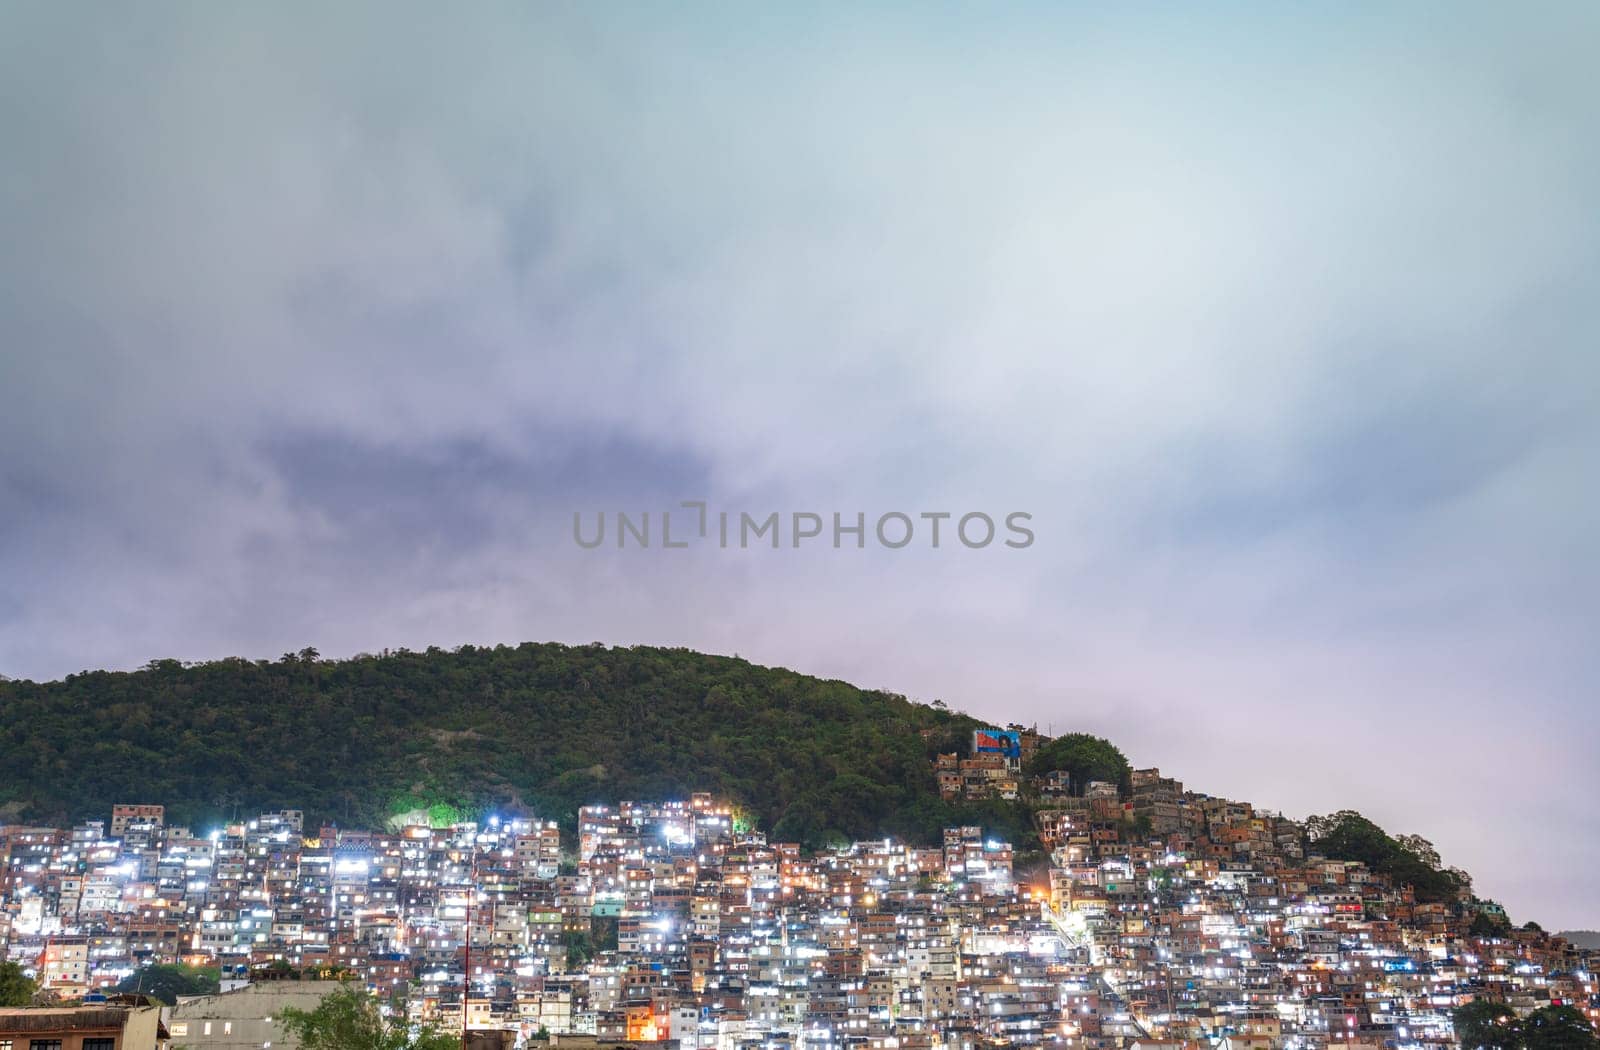 Illuminated Favela at Dusk Against a Moody Sky by FerradalFCG